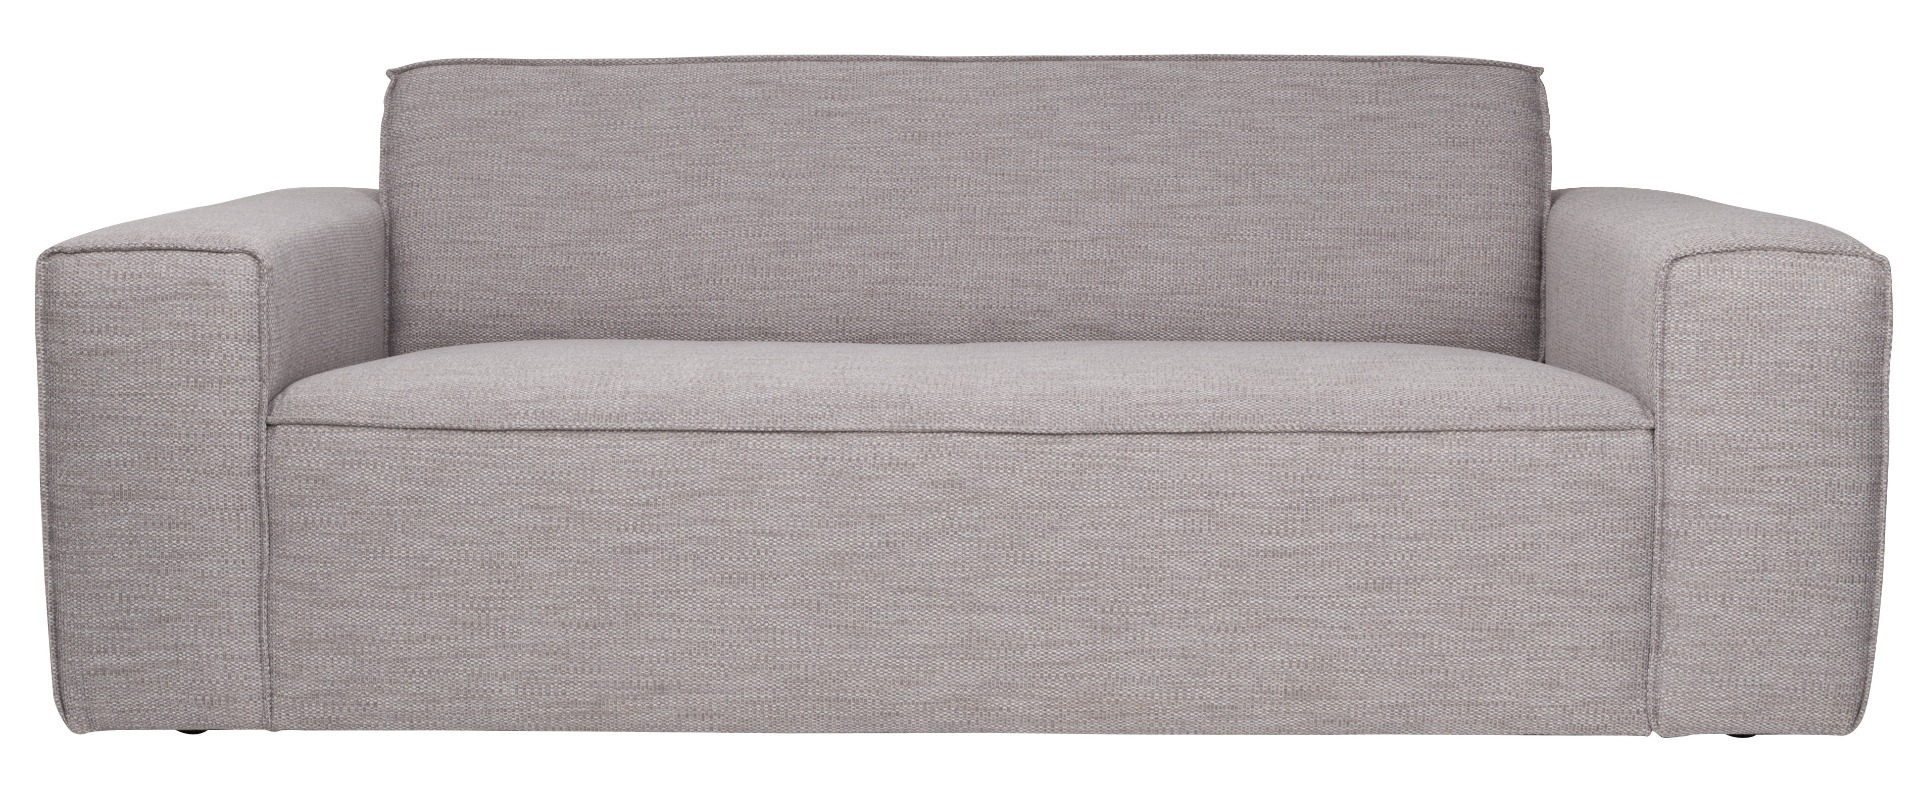 Bor 2.5 seater sofa in Light Grey